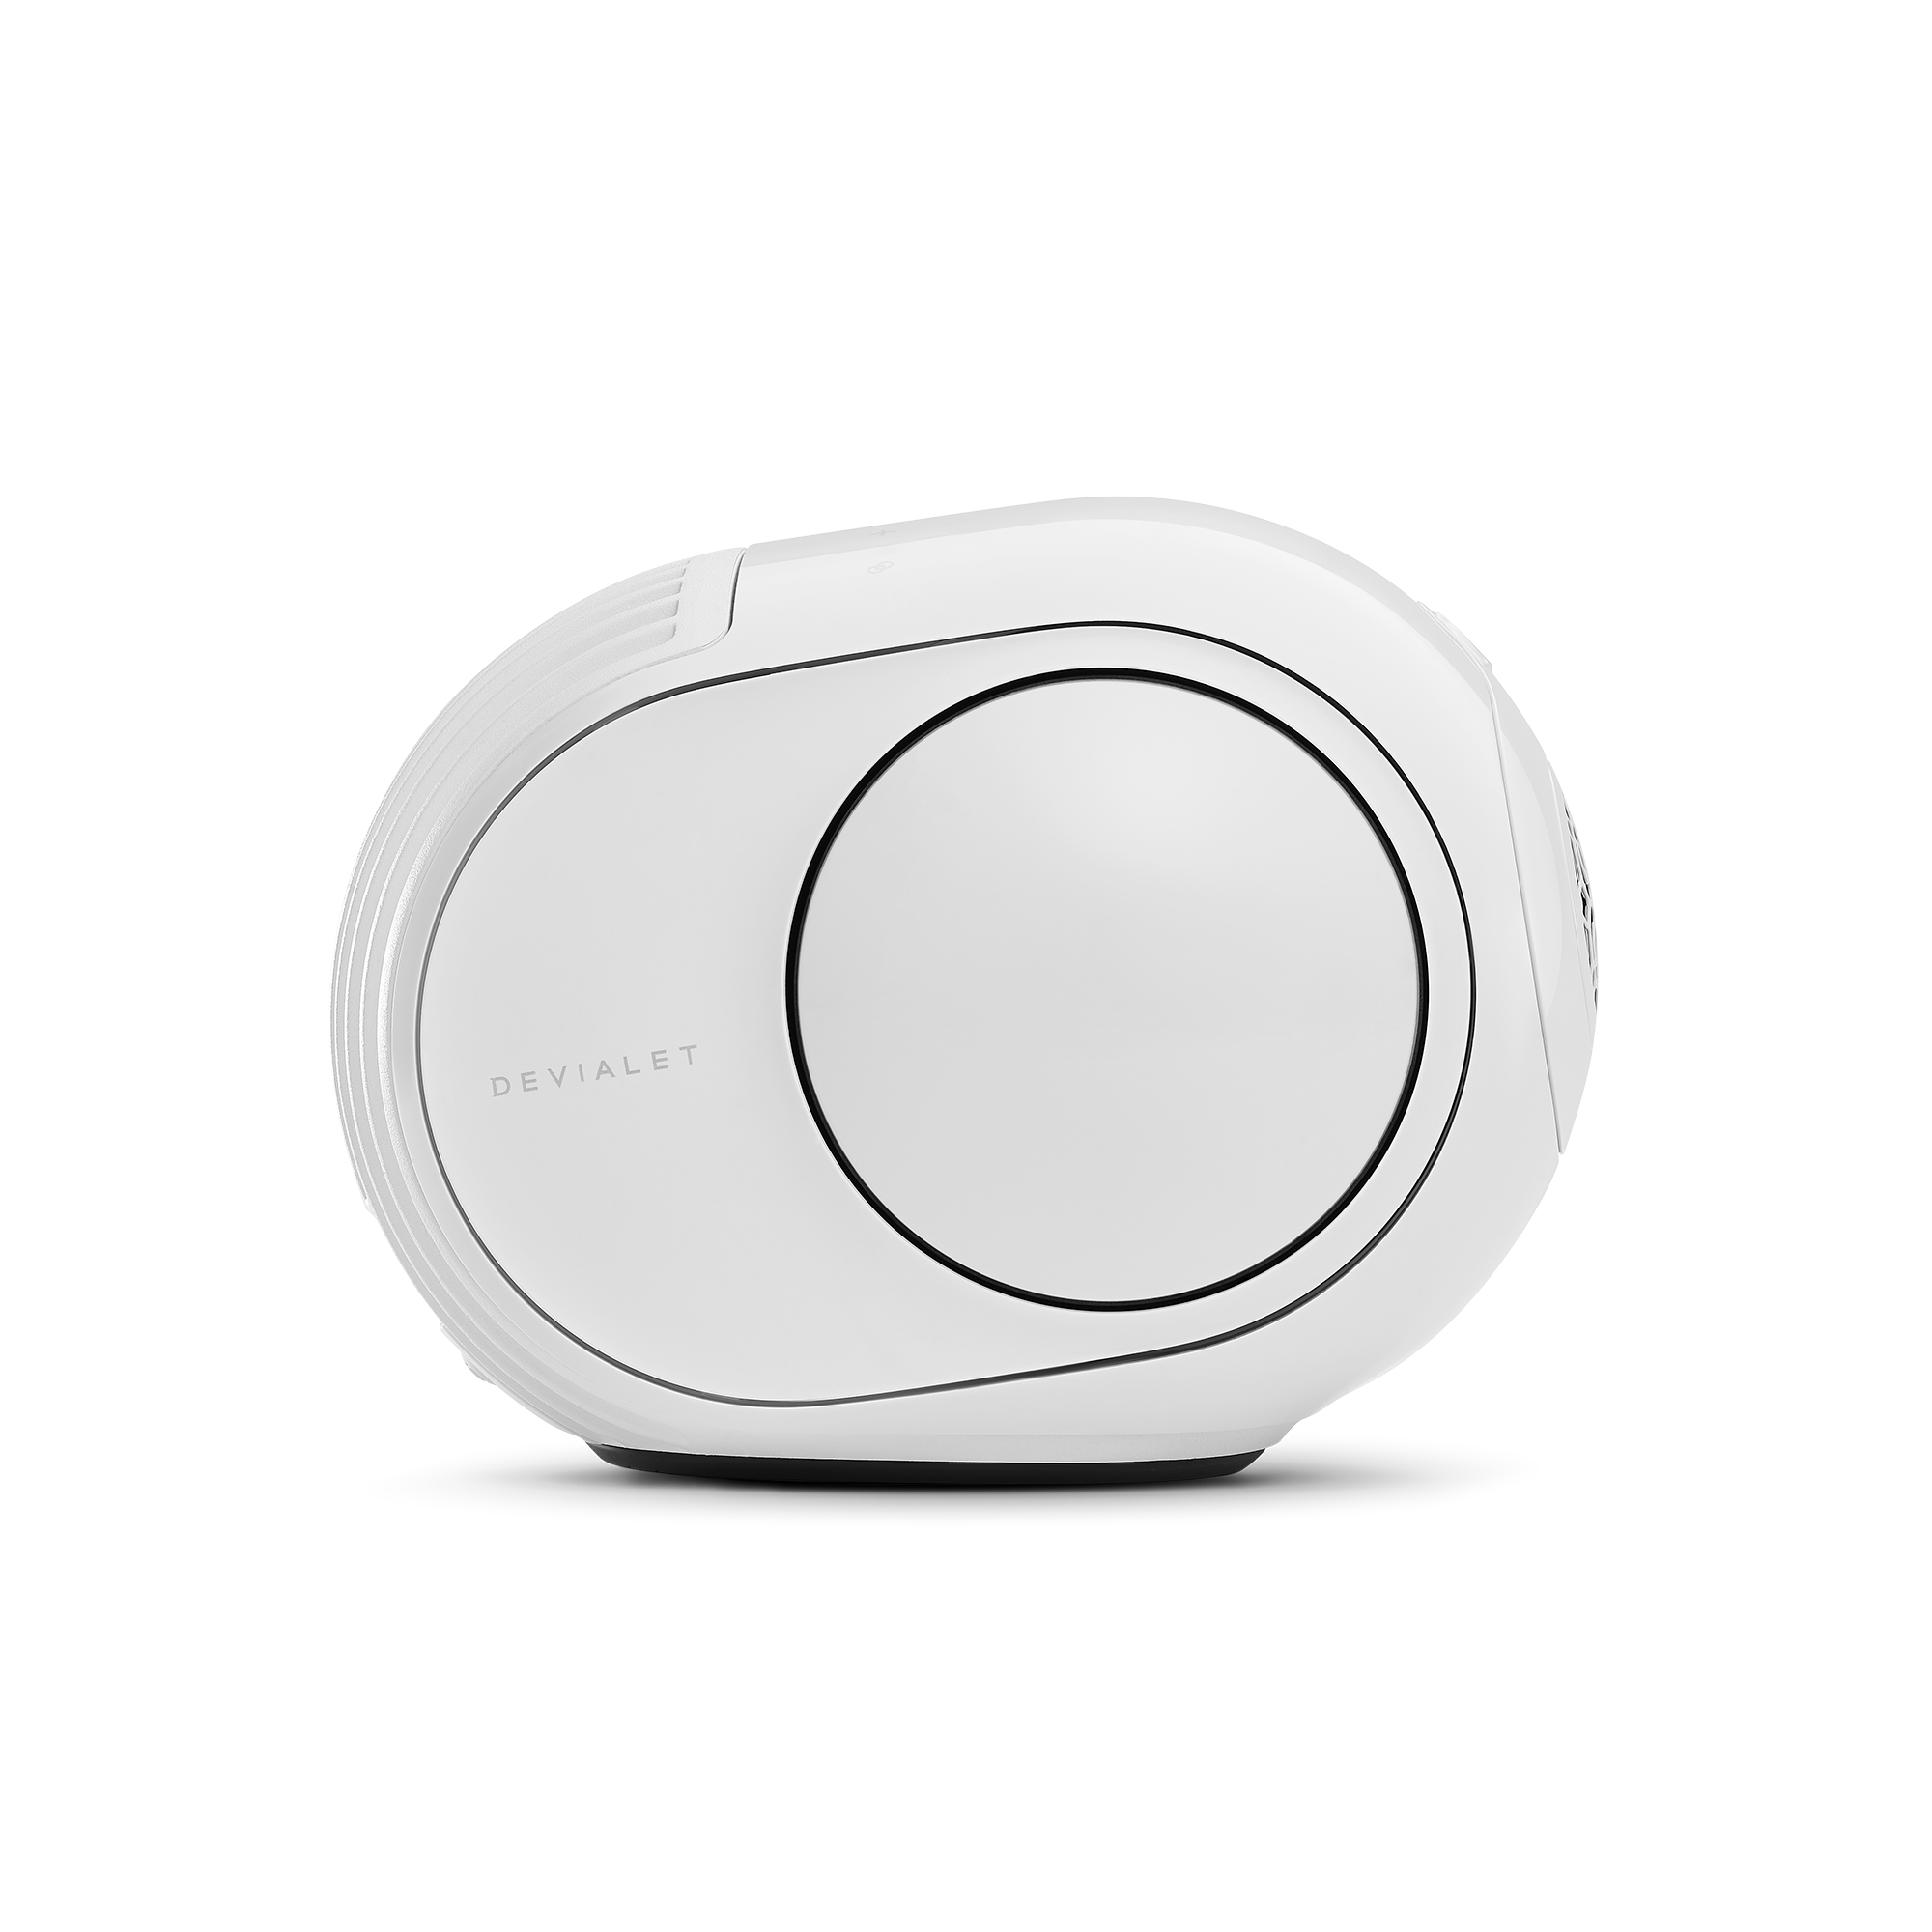 Devialet Phantom II - 95 dB - Compact Wireless Speaker - Iconic White